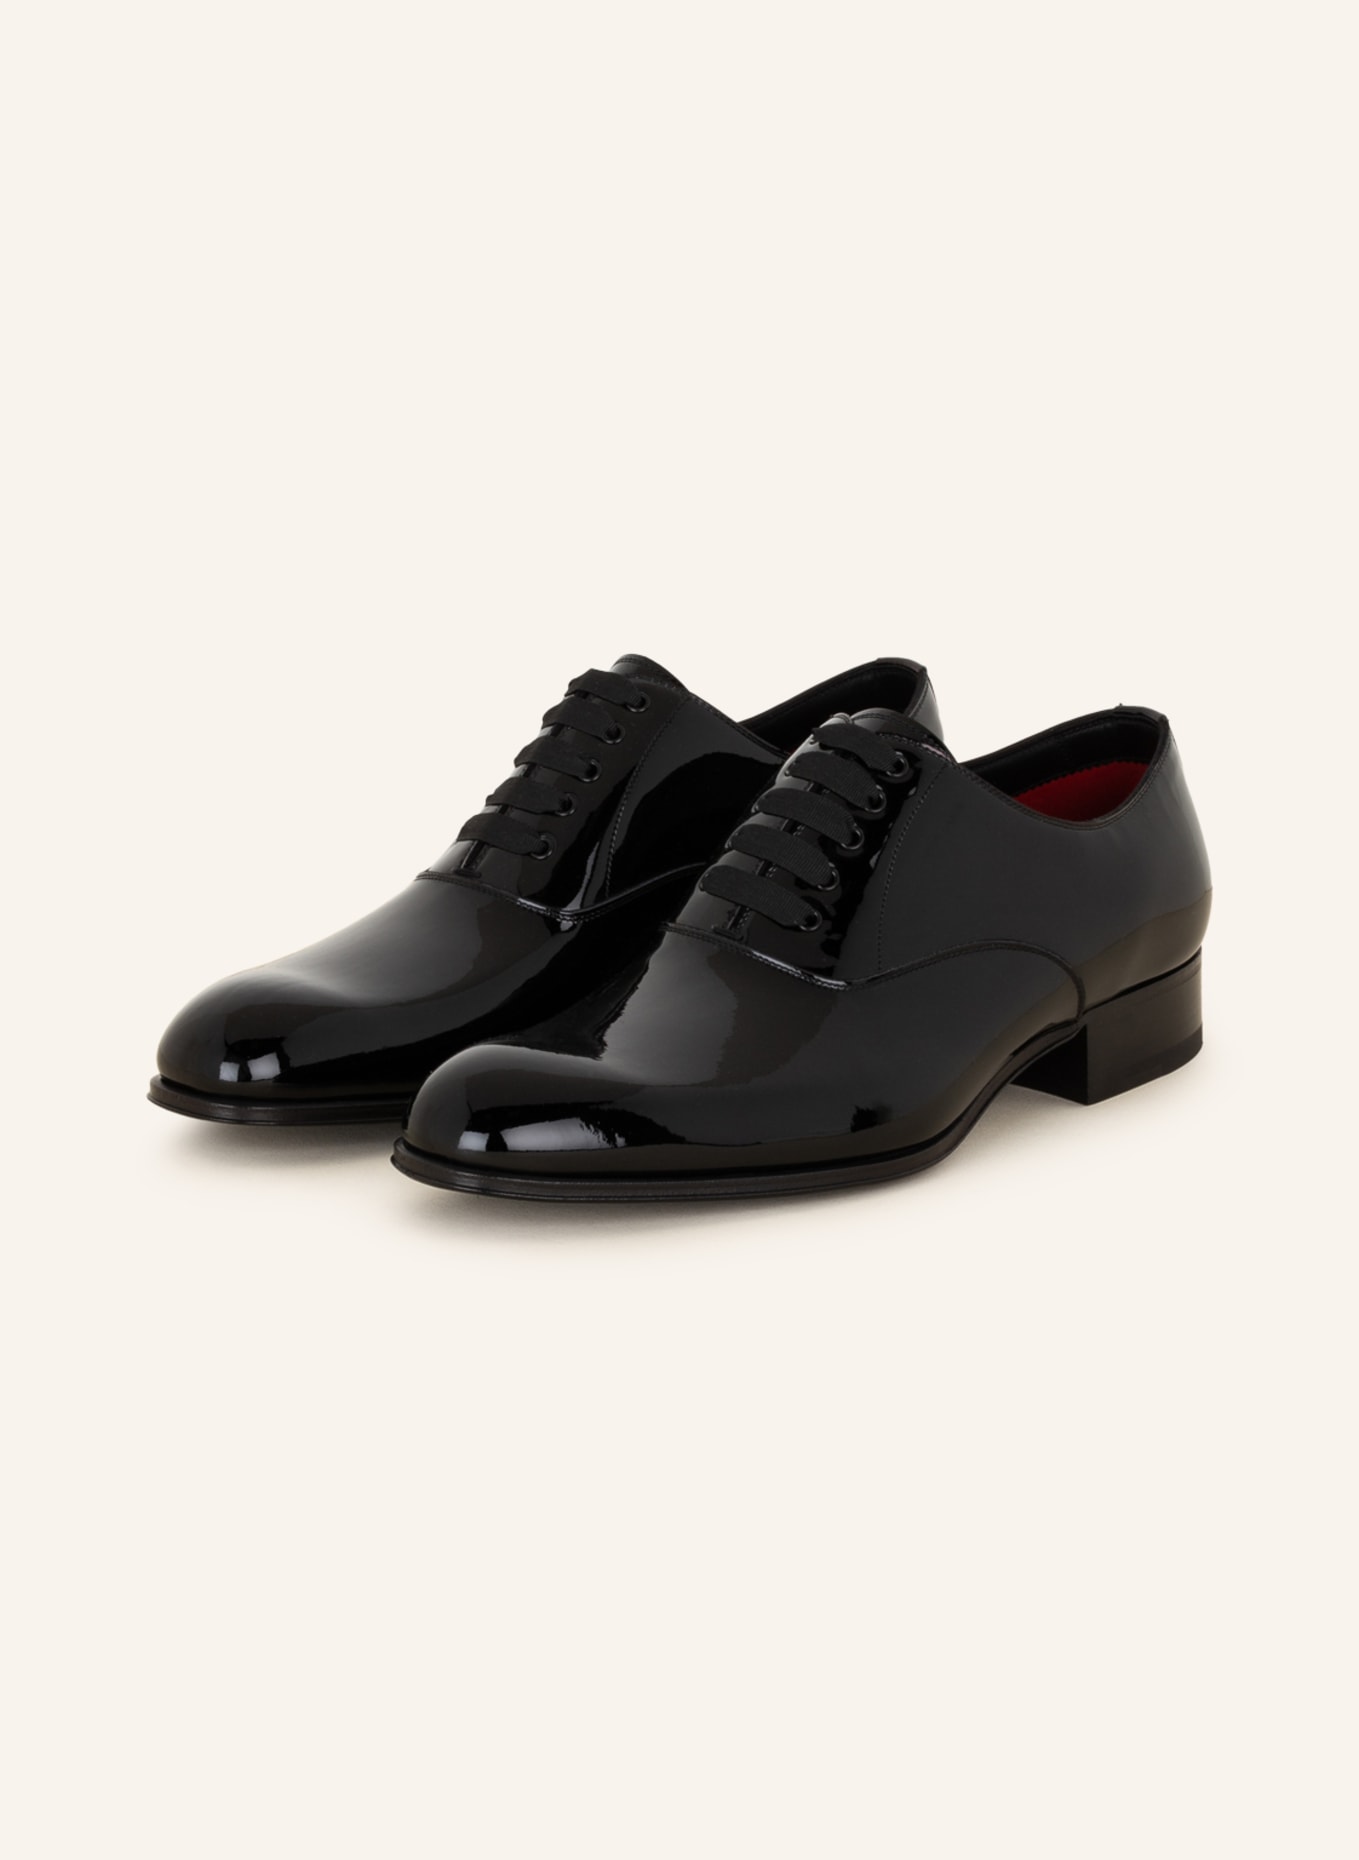 grill Indirekte foder TOM FORD Patent lace-up shoes EDGAR in black | Breuninger